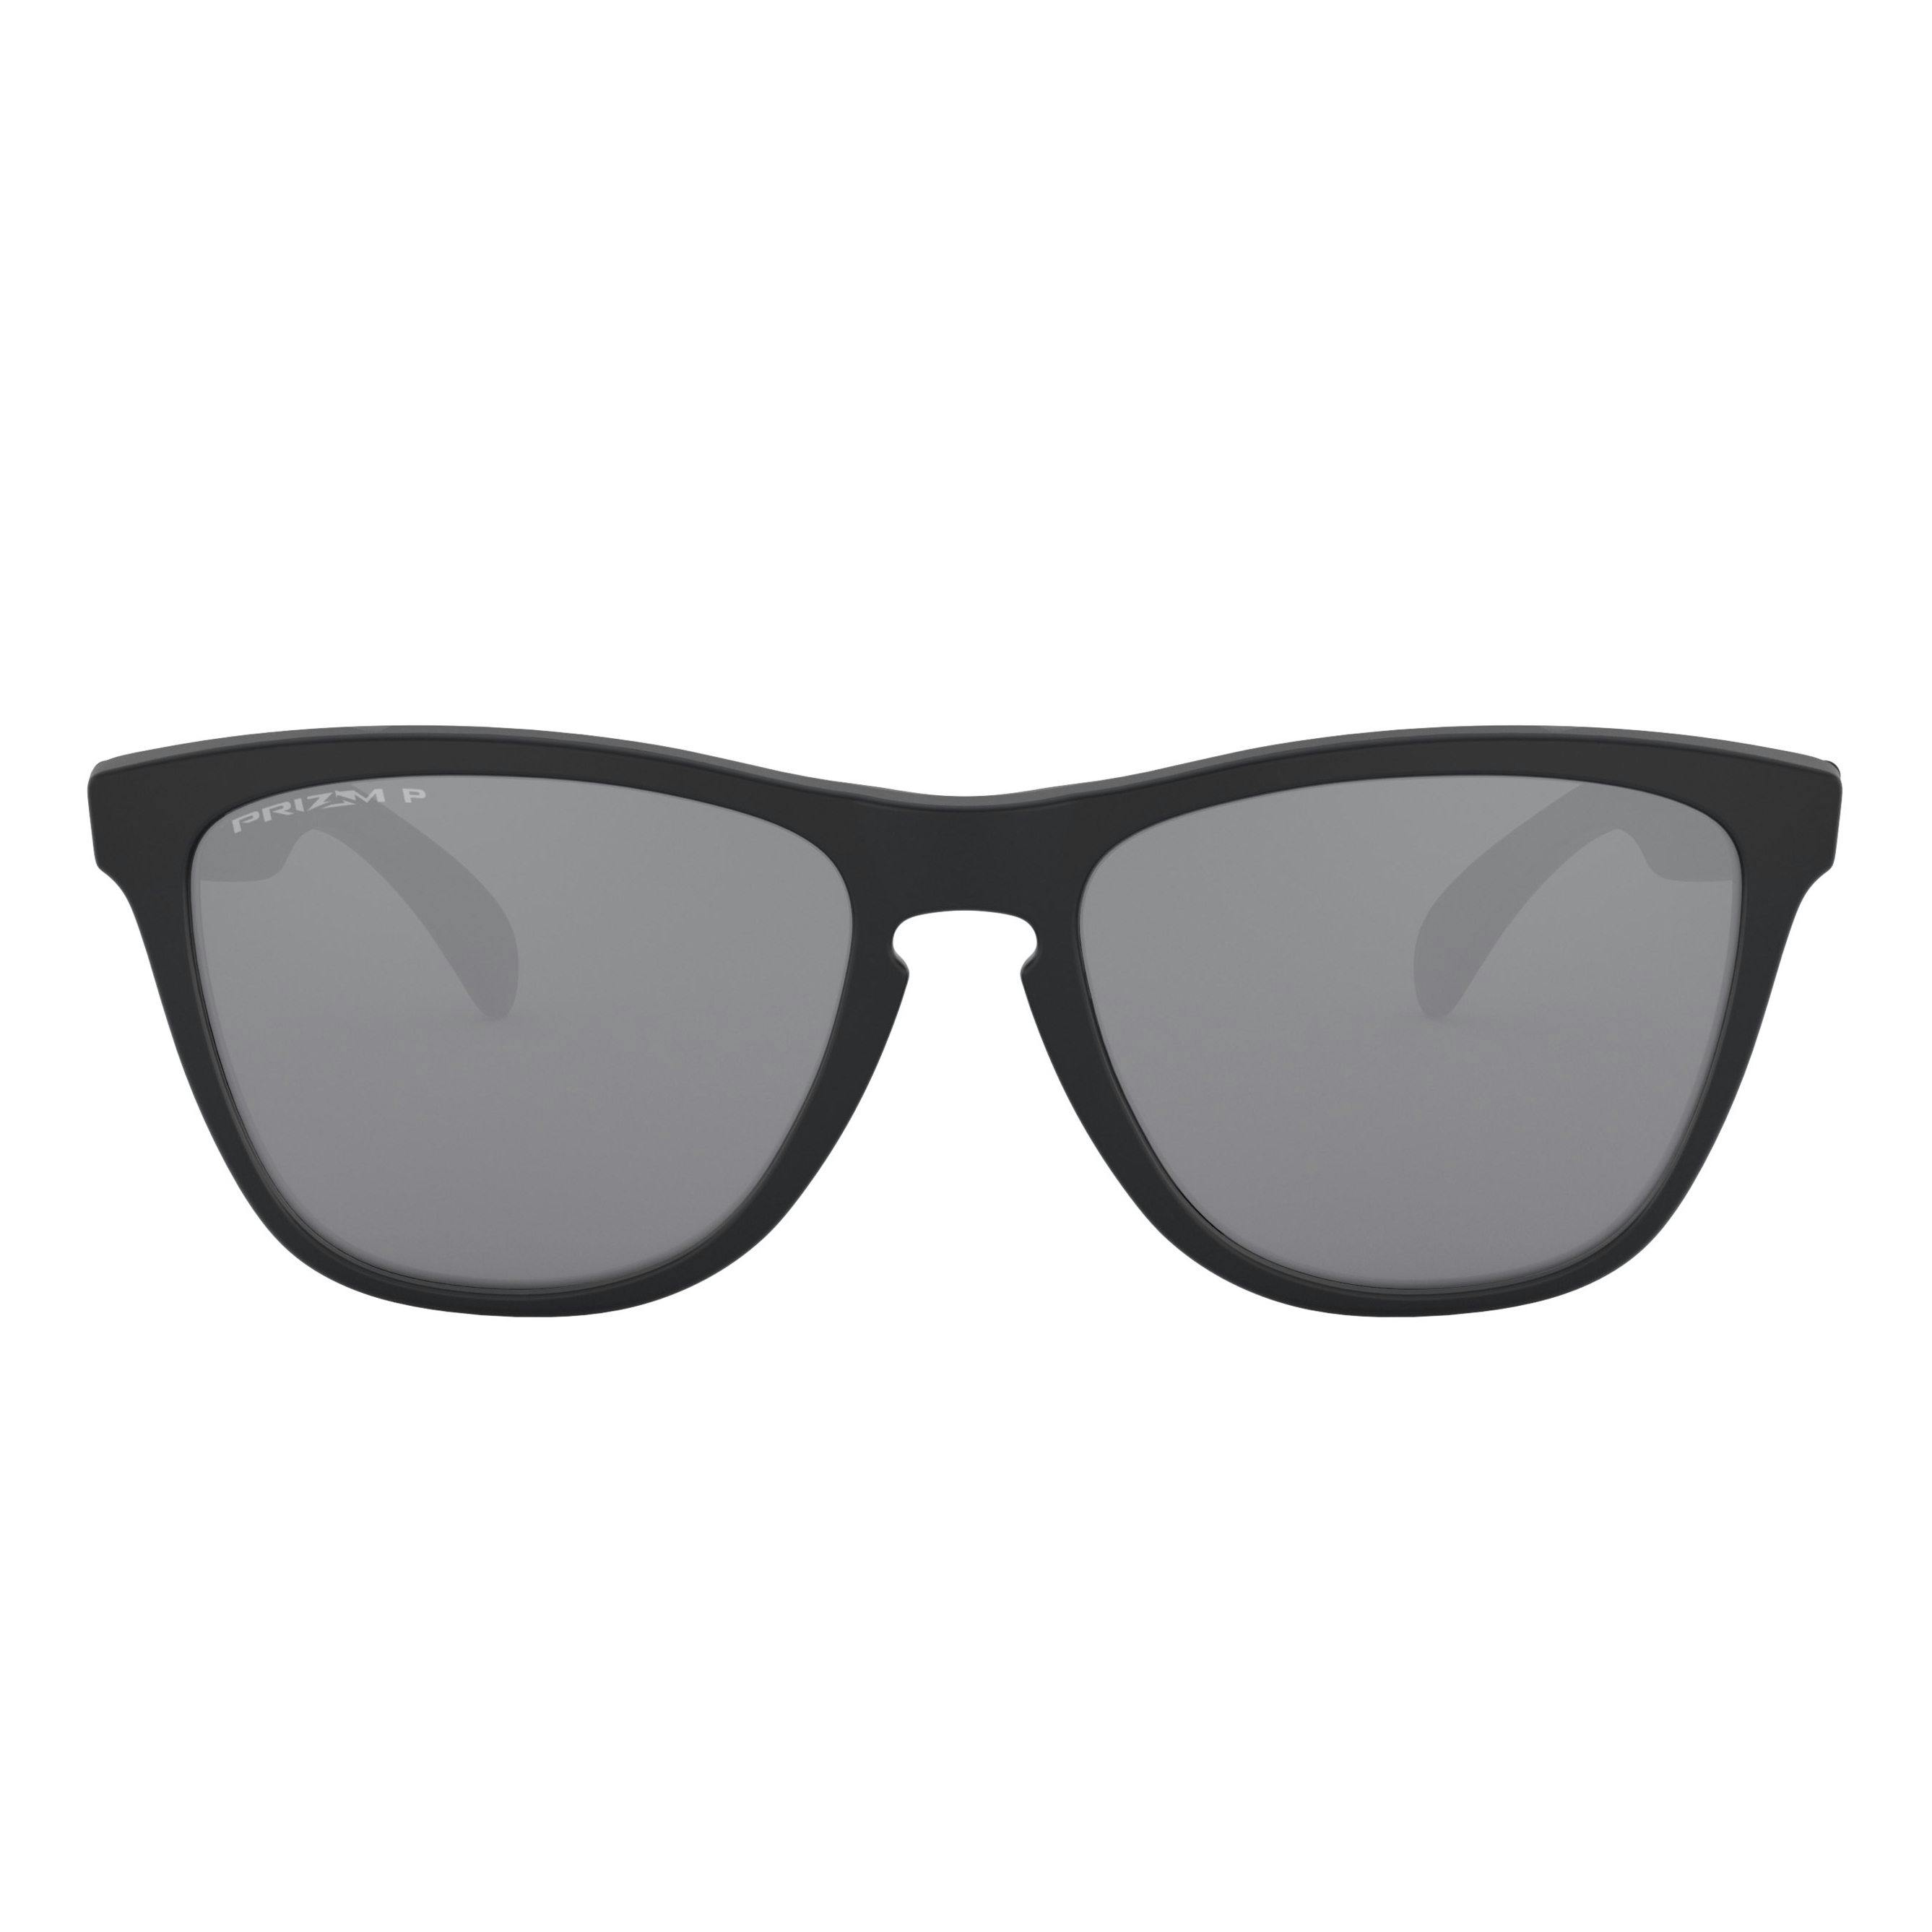 Oakley Frogskins Sunglasses - Matte Black / Prizm Black Polarized, Sunglasses